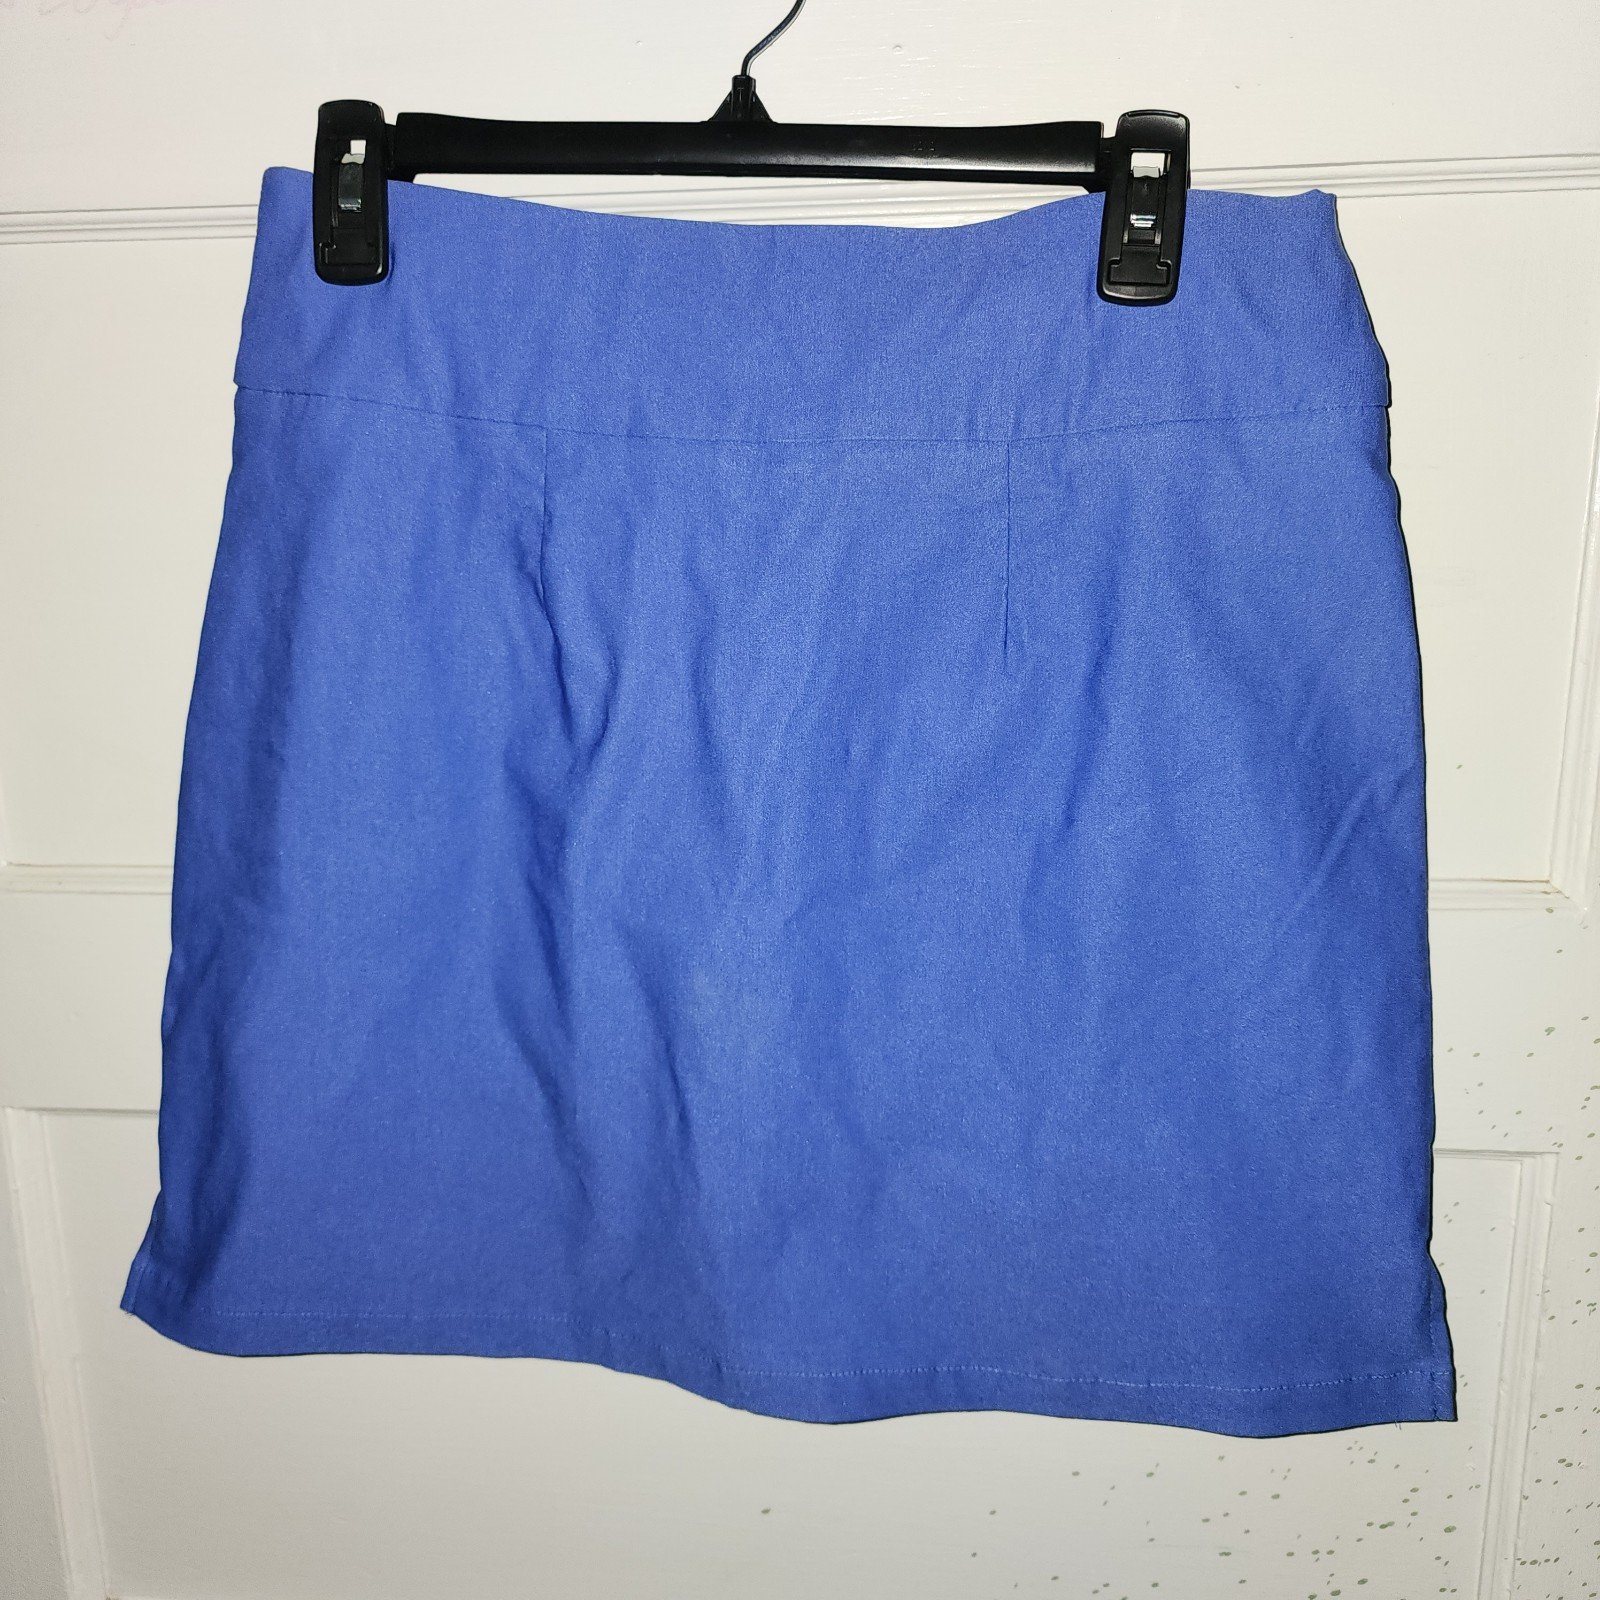 Popular Rafaella Athletic Stretch Skirt H6HAxWNPO Online Shop